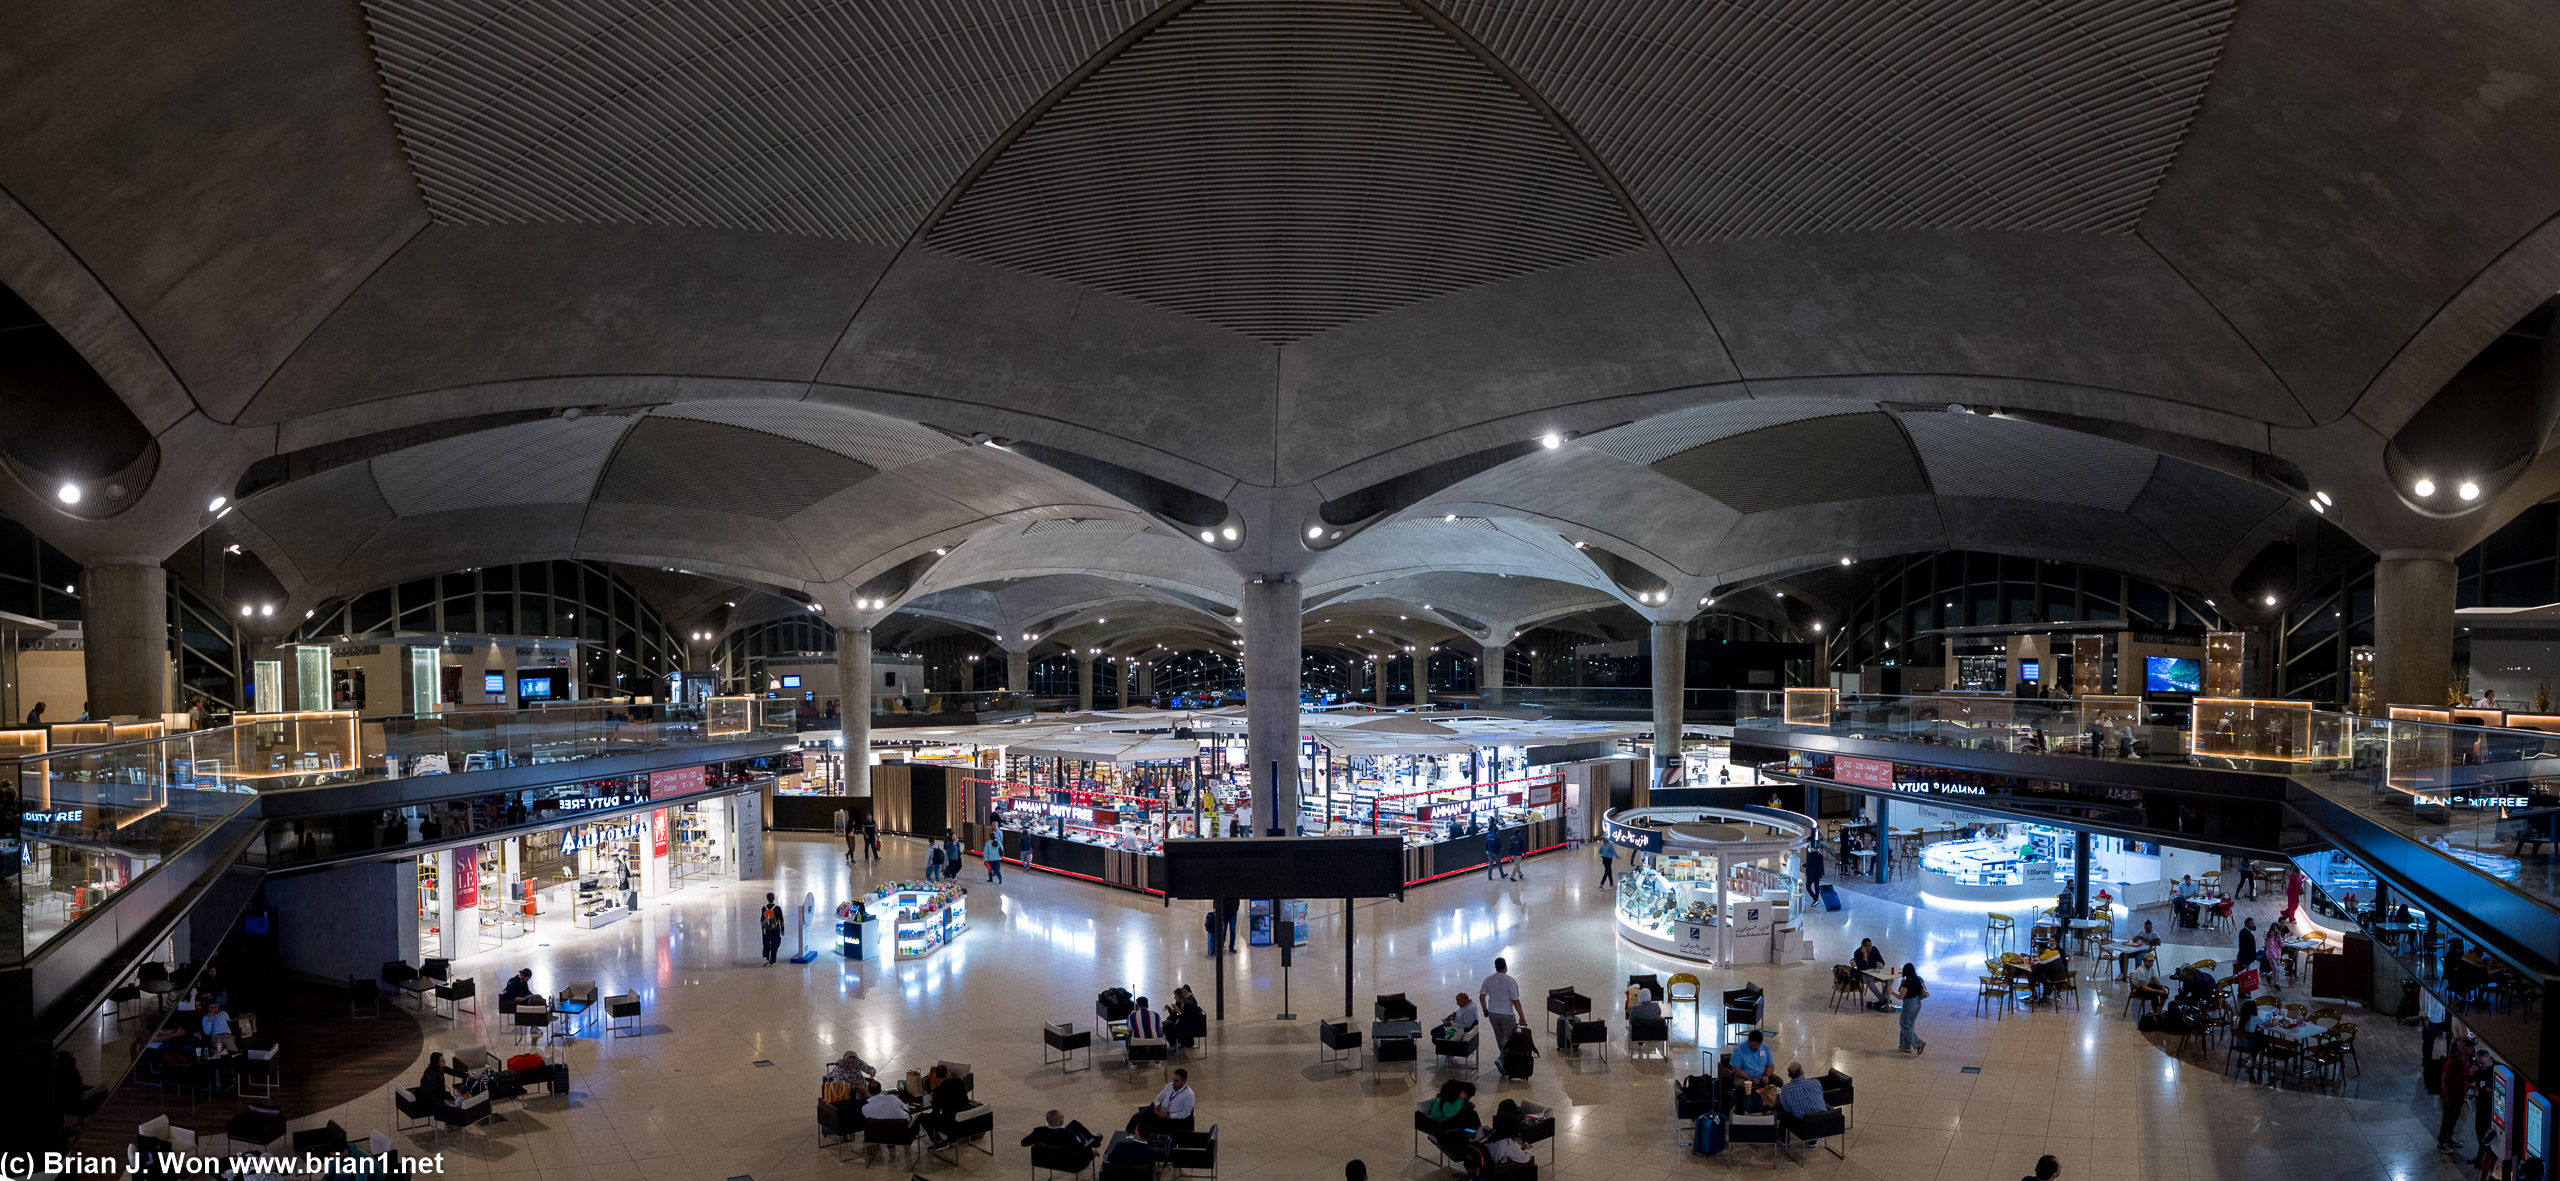 Main terminal viewed from the Royal Jordanian lounge.